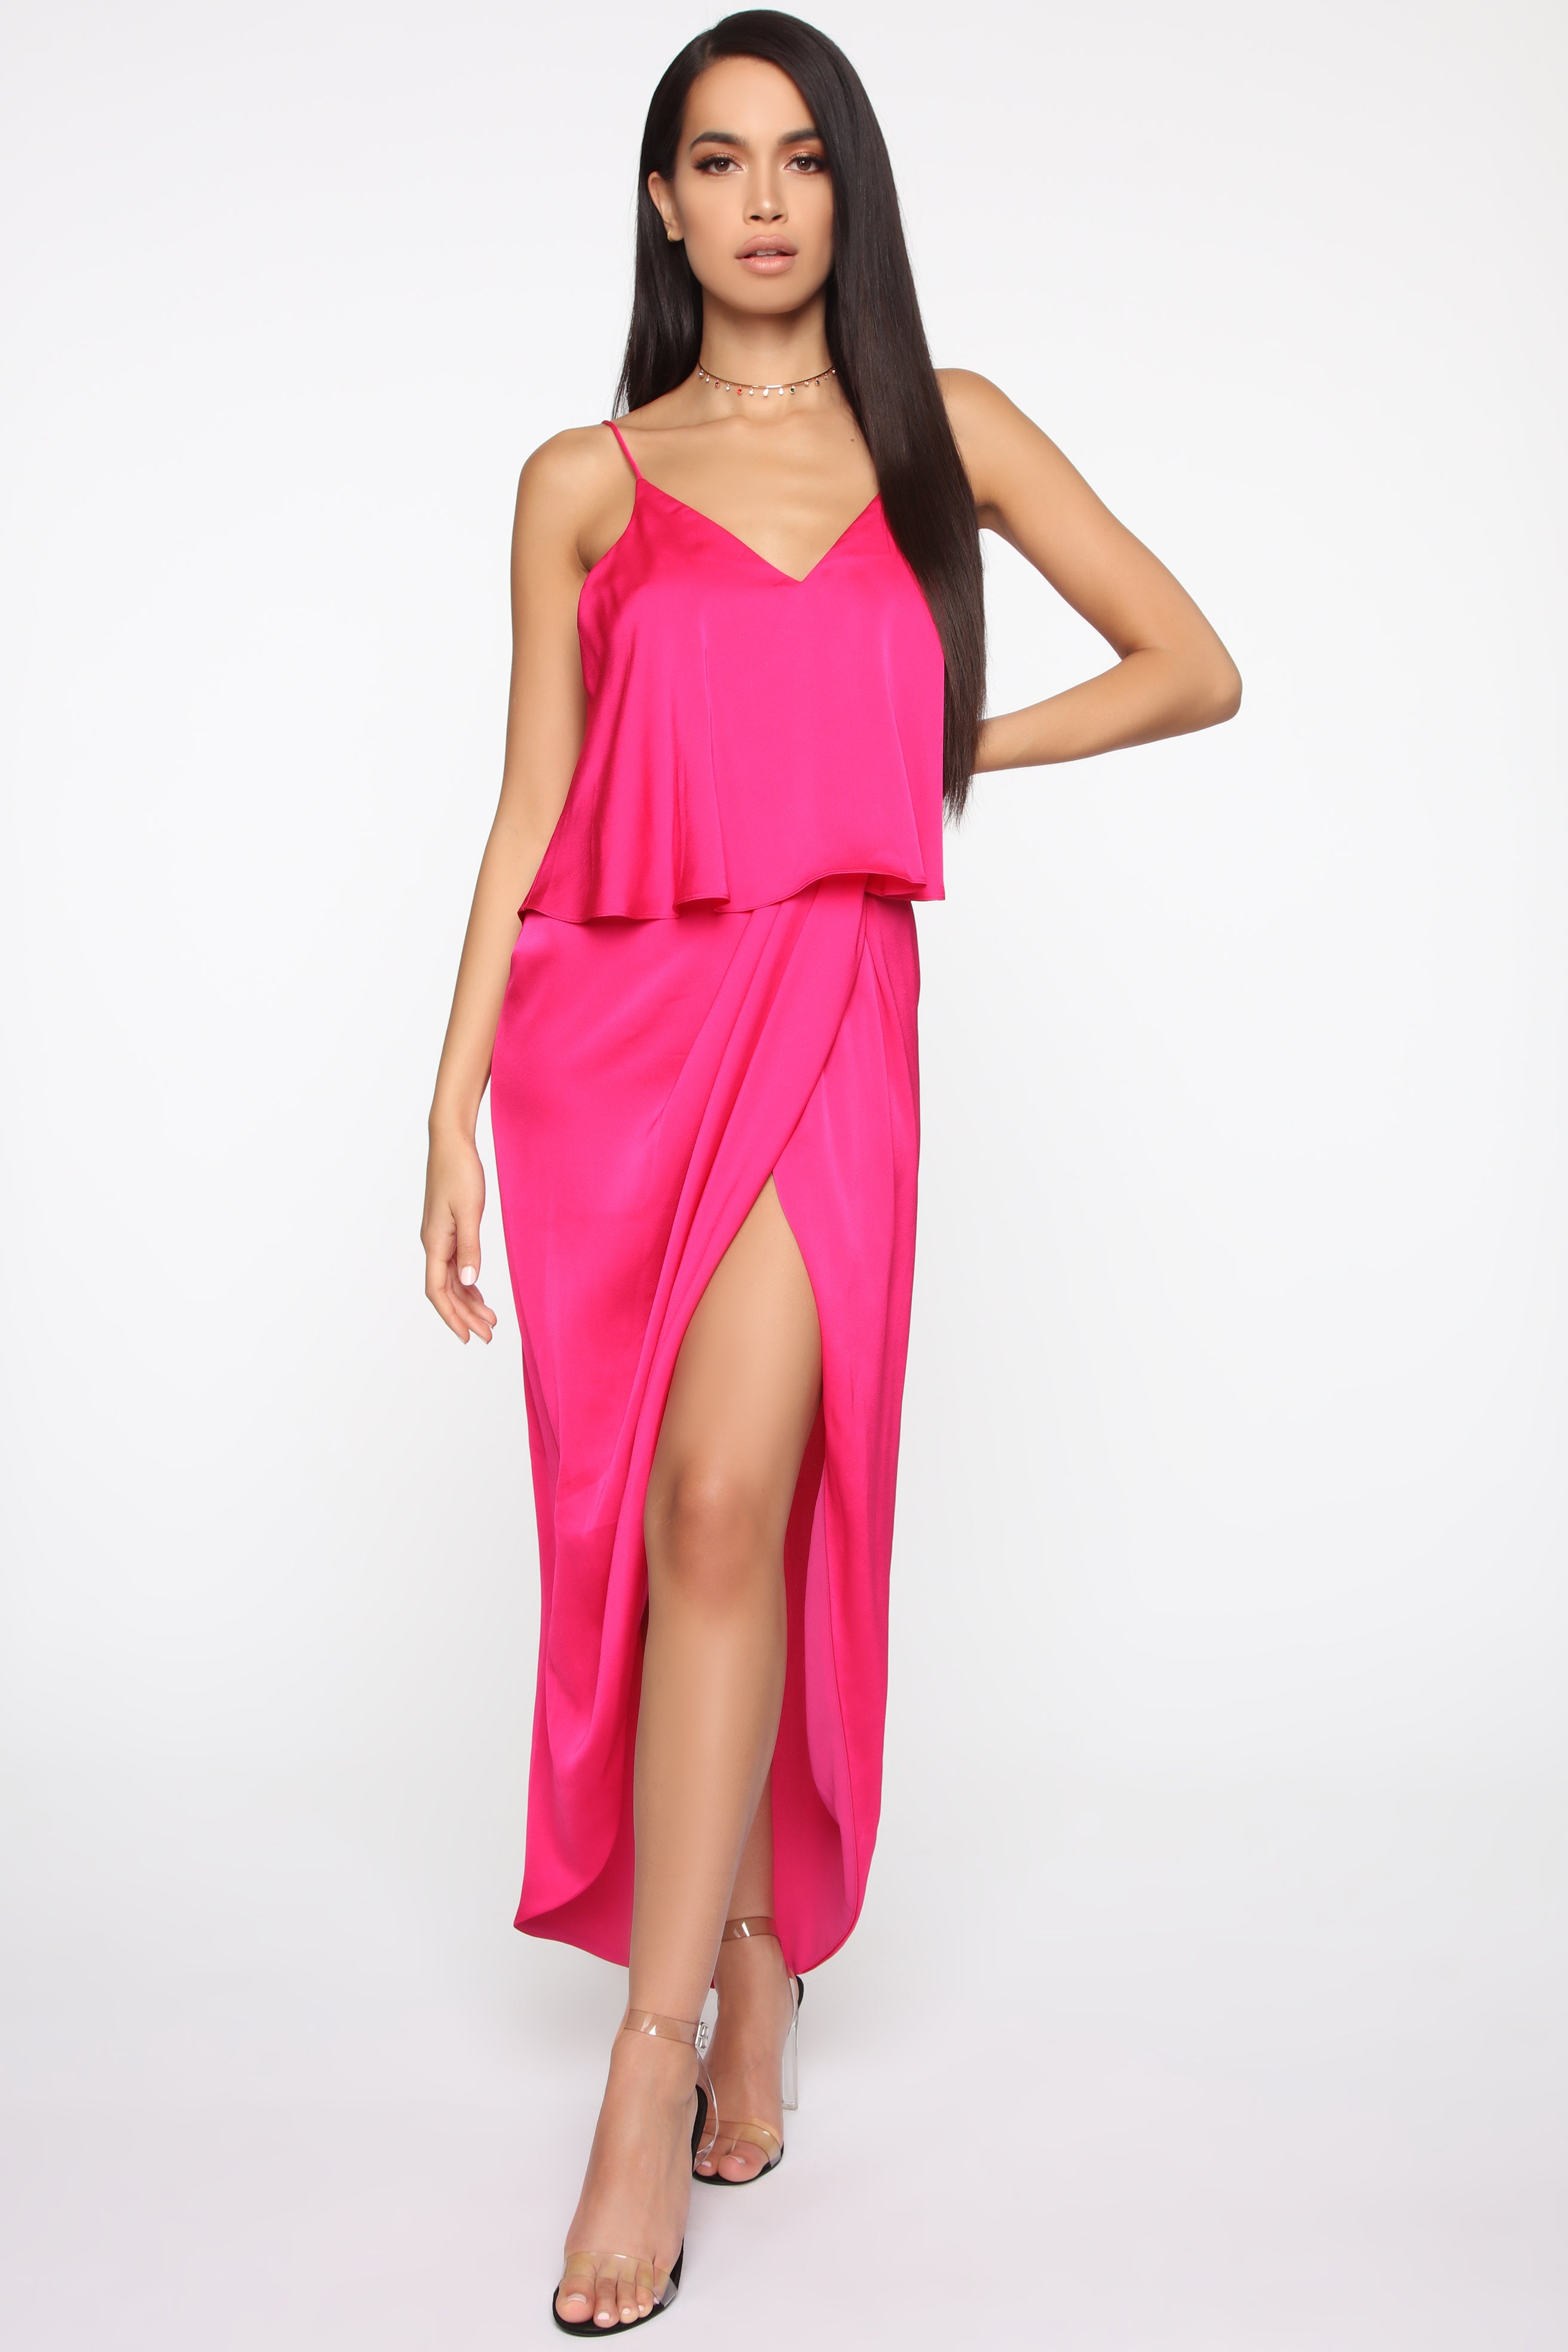 On Top Of It All Maxi Dress - Hot Pink – Fashion Nova